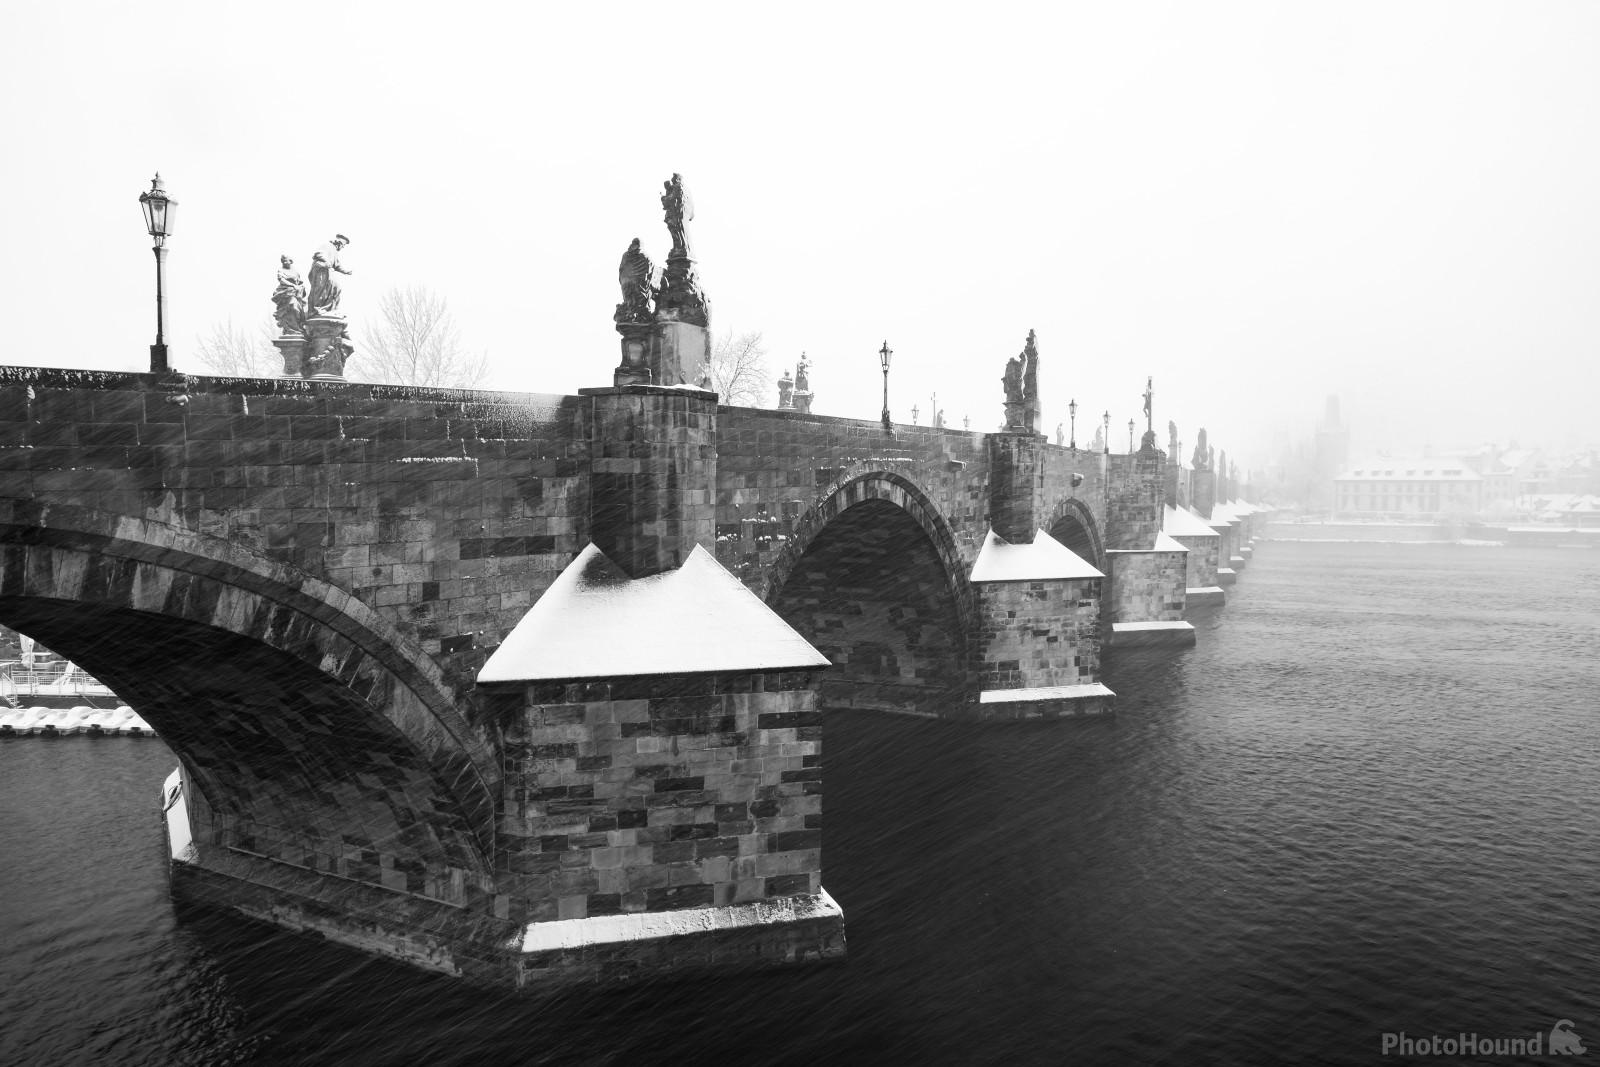 Image of Charles Bridge from the Křížovnické Square by VOJTa Herout